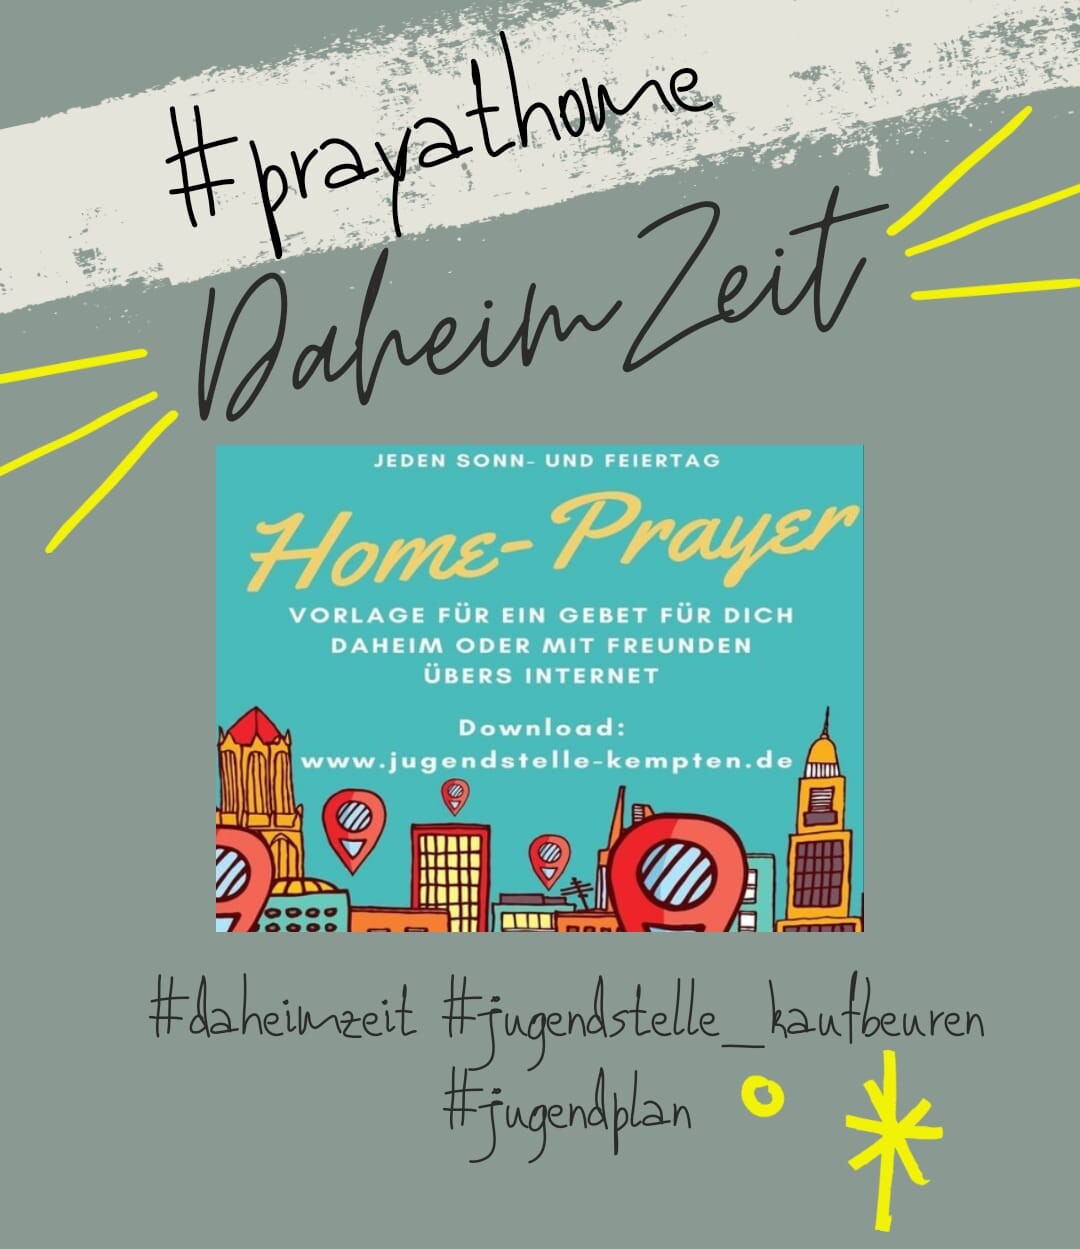 #prayathome - Homeprayer vom 3. Mai (Samstag, 02. Mai 2020 - Download)